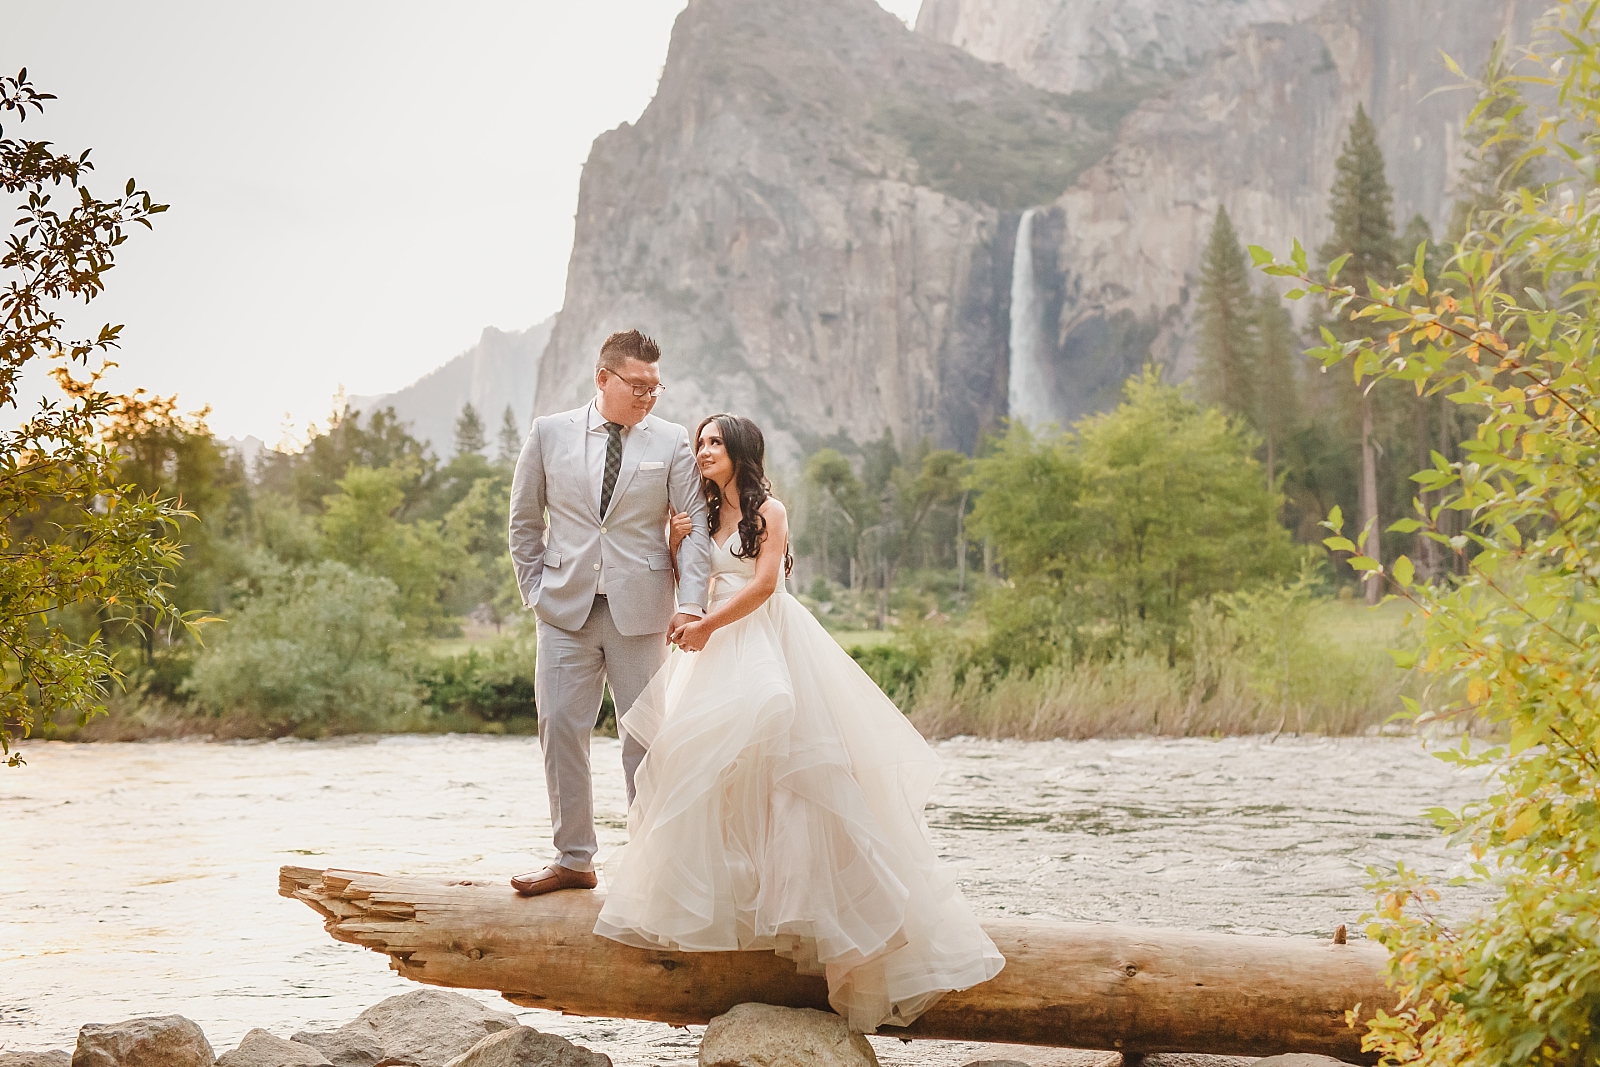 Wedding photos at sunrise in Yosemite Valley